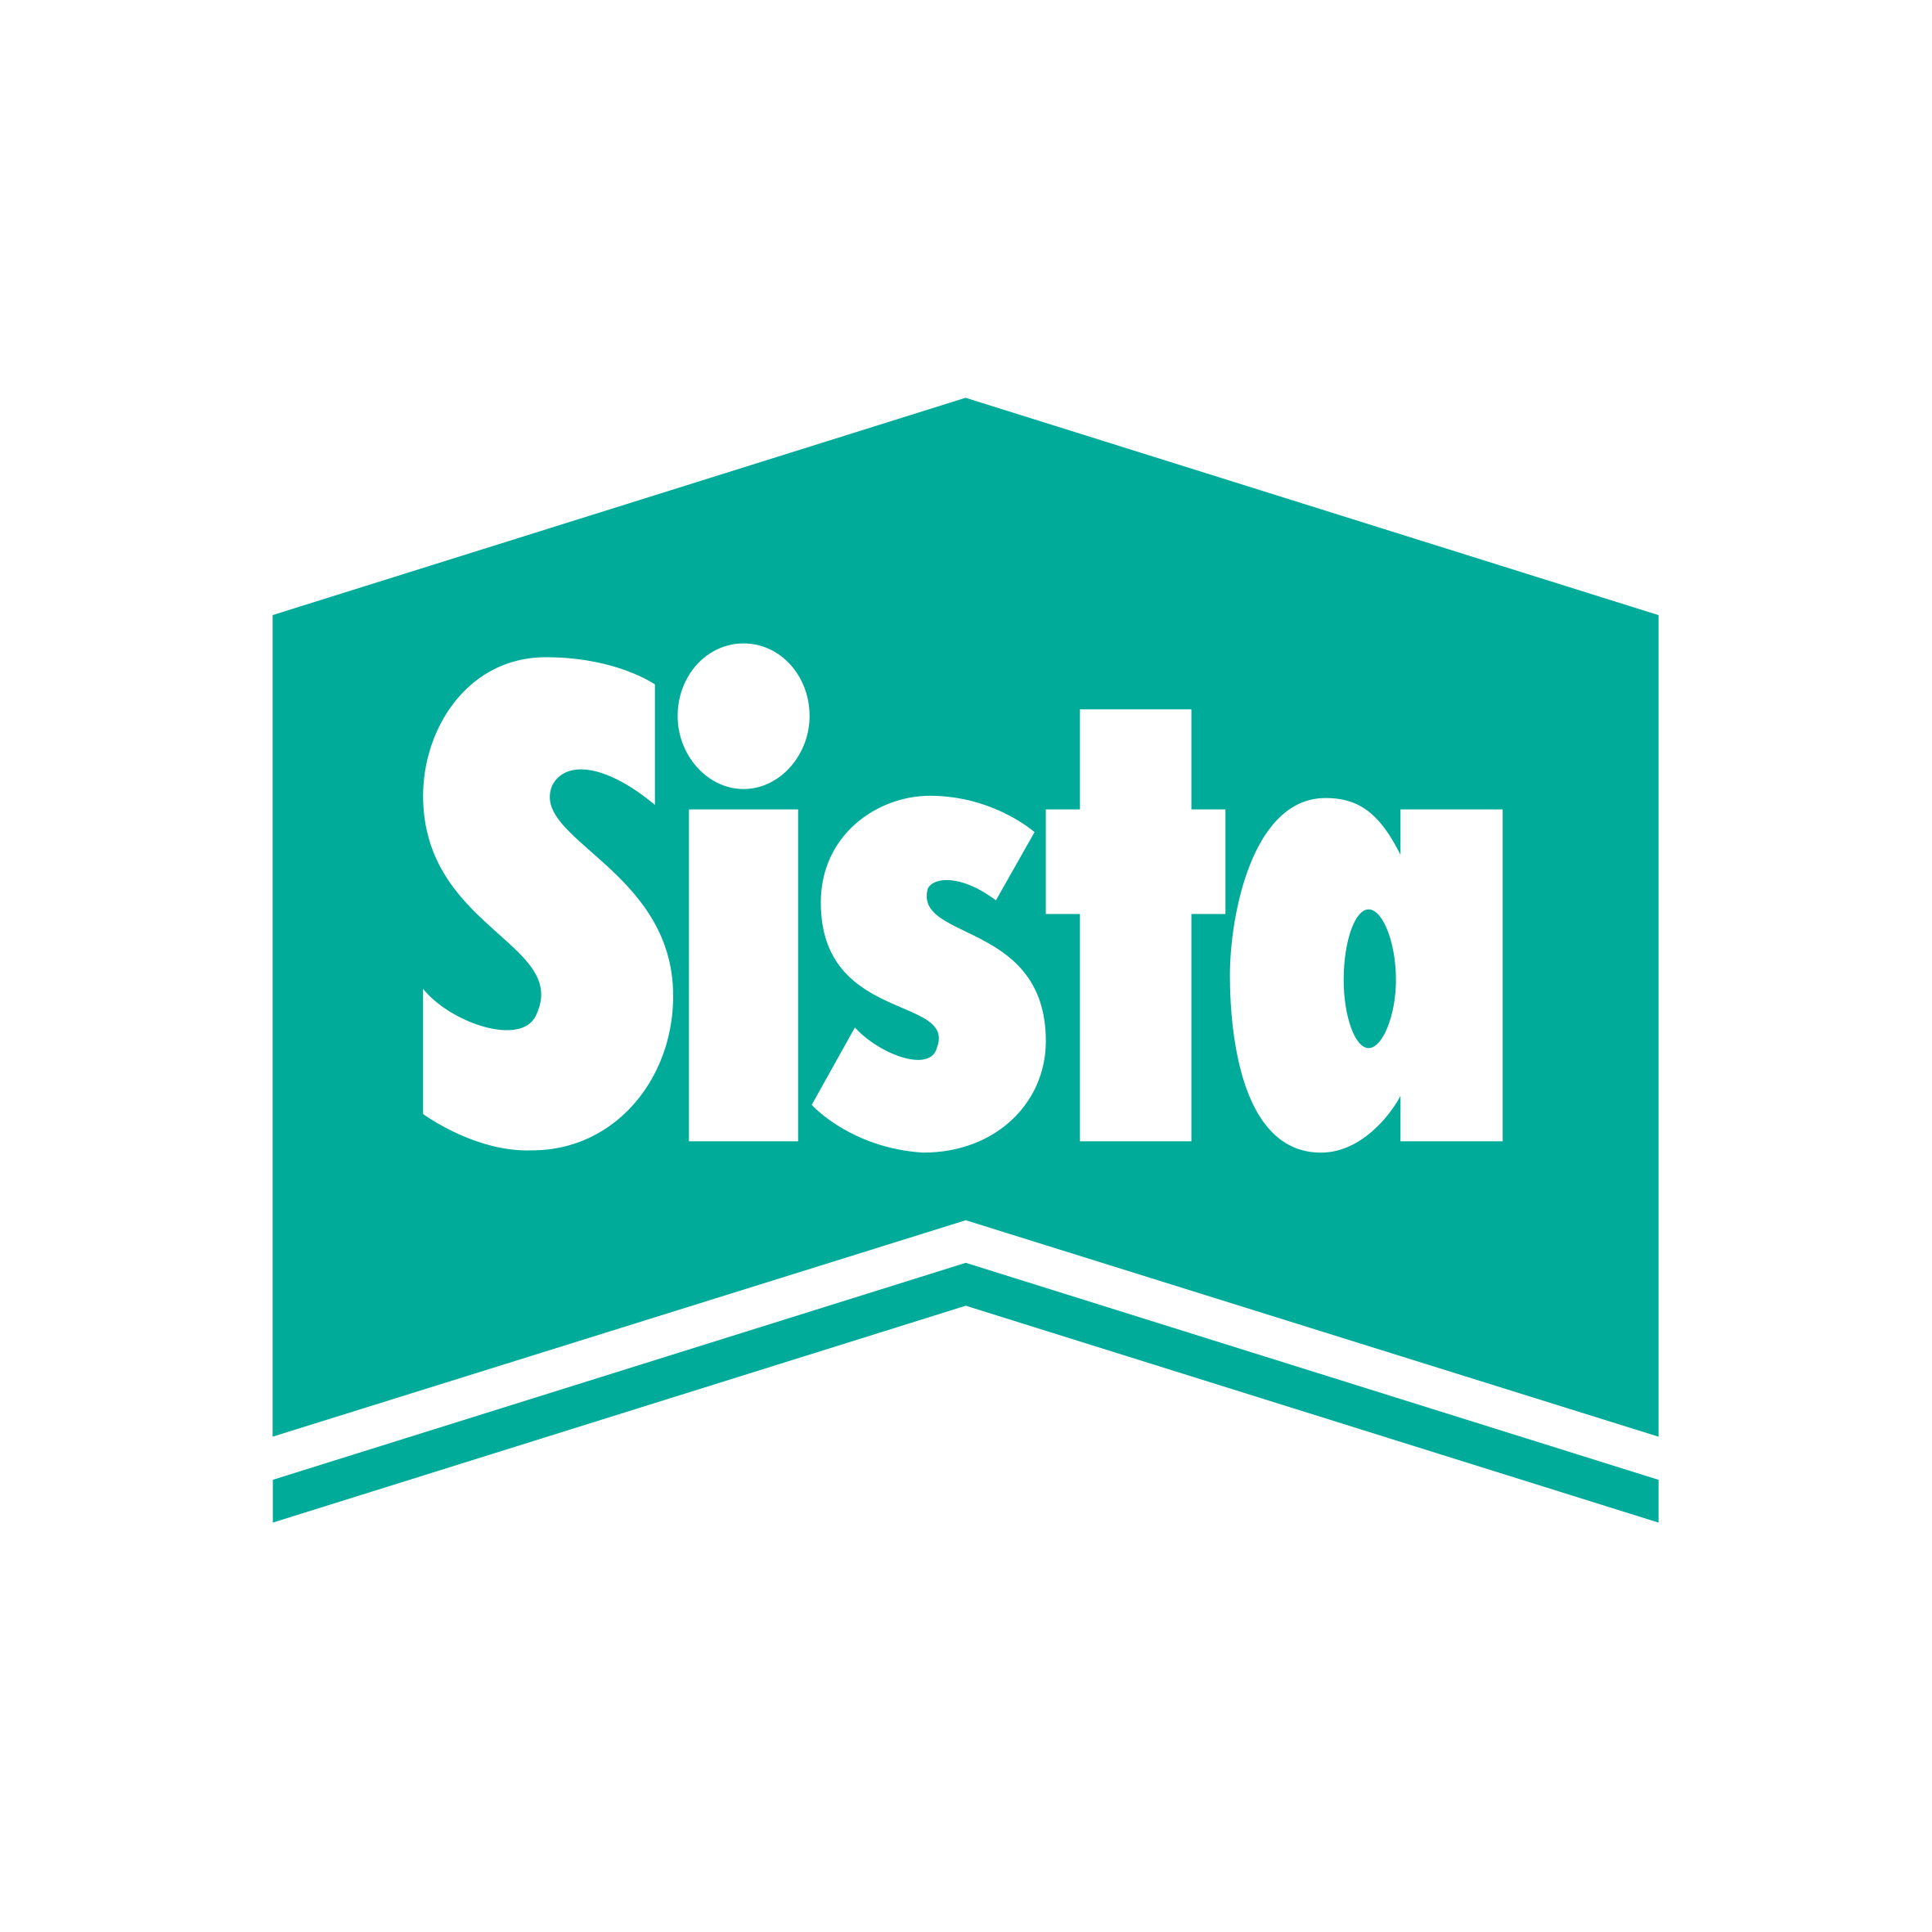 Sista Silikon für Bad & Küche transparent - 100ml, 1,99 €